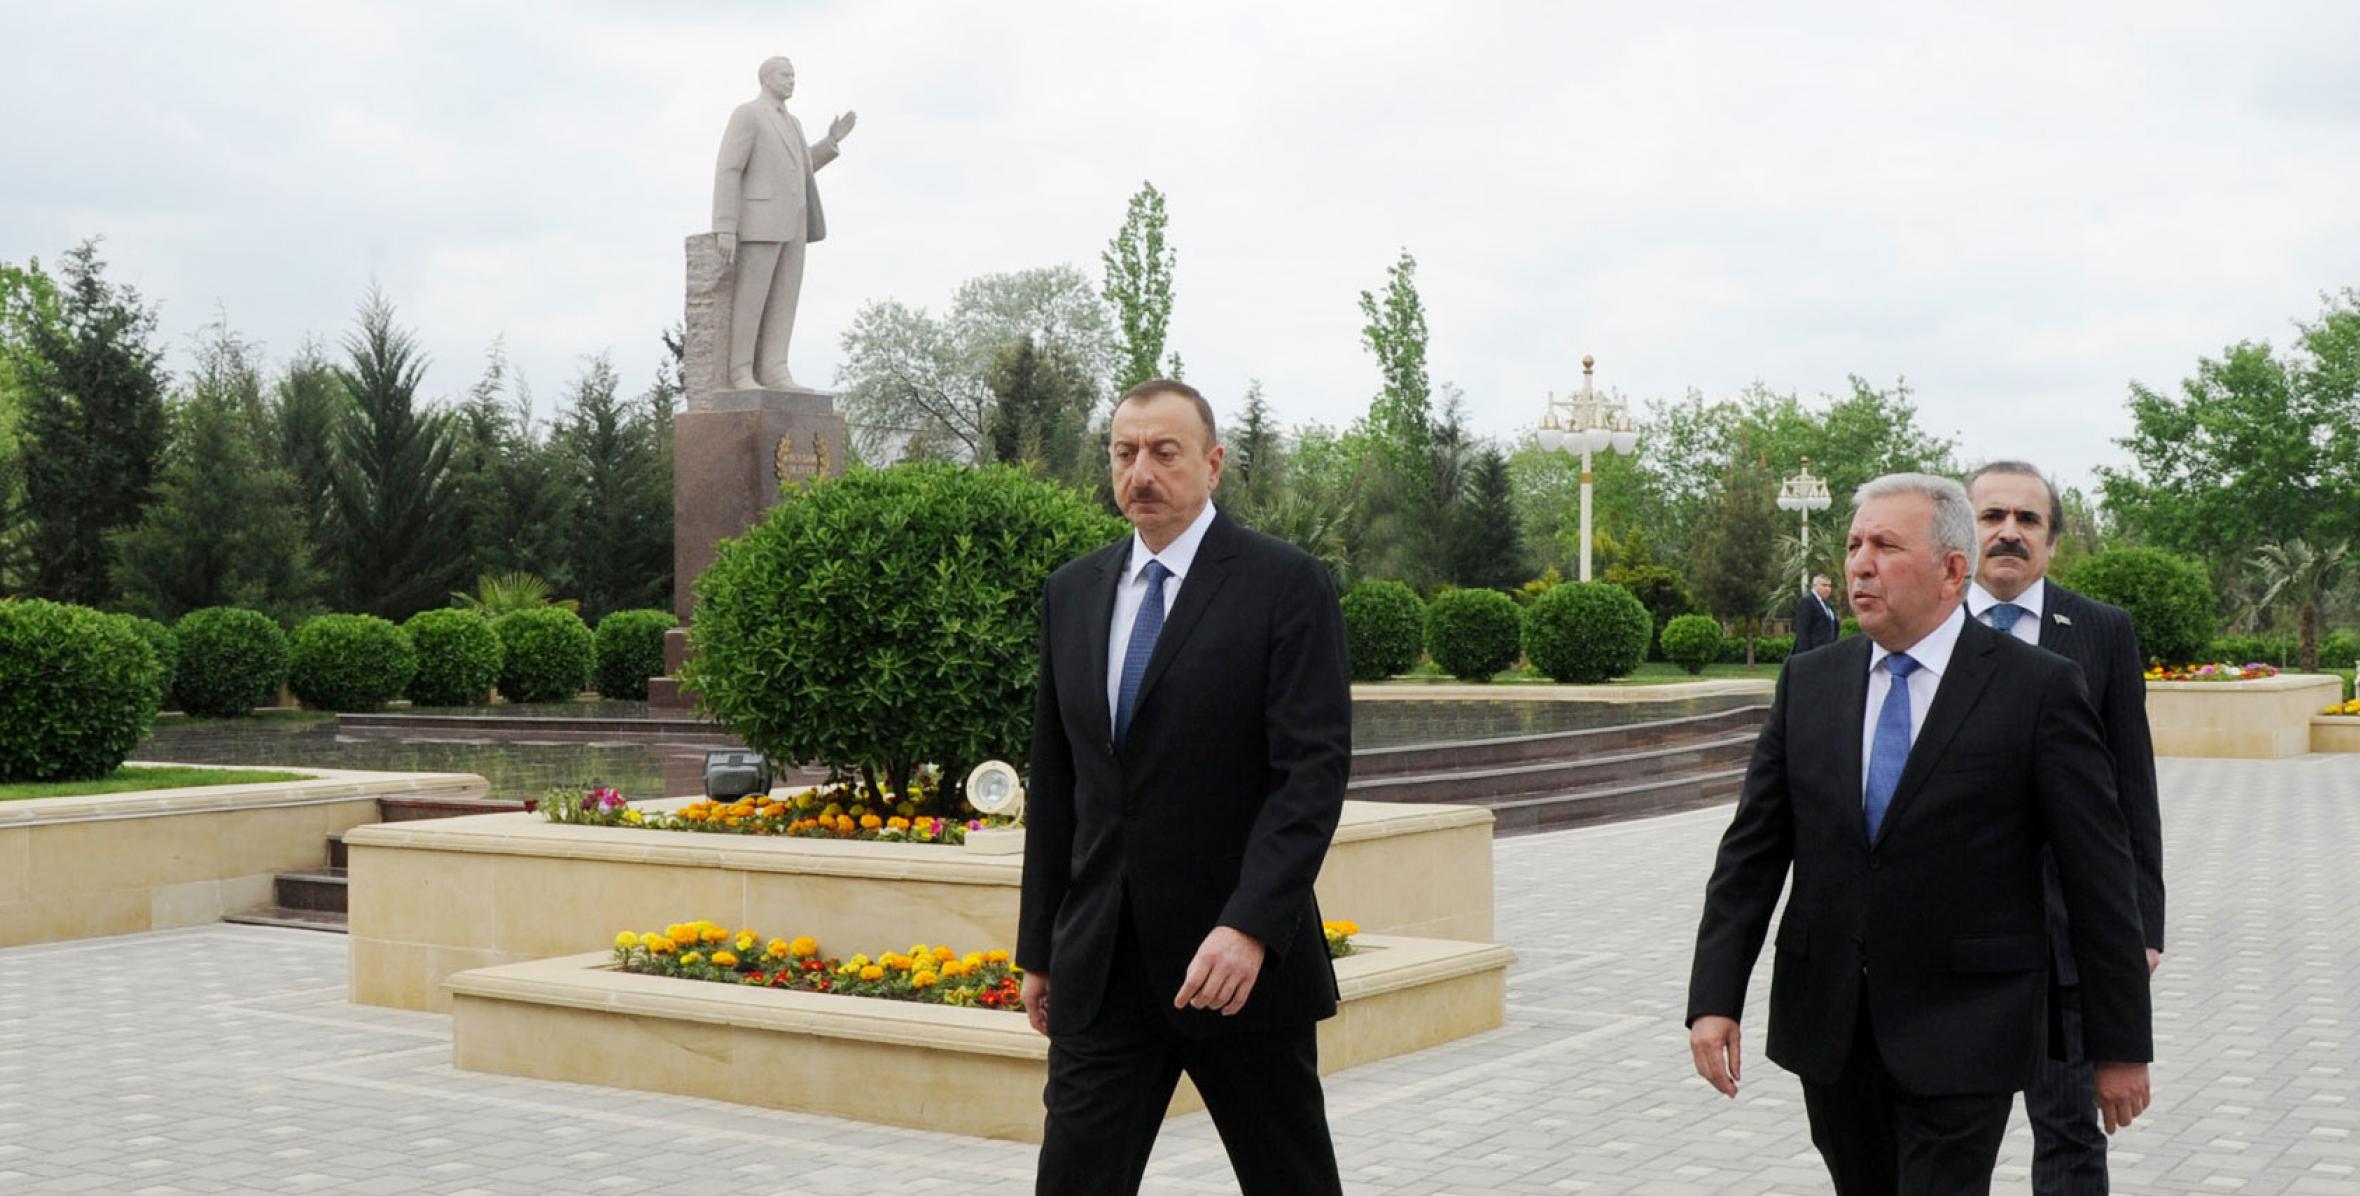 Ilham Aliyev reviewed the restored Center of Heydar Aliyev in Hajigabul